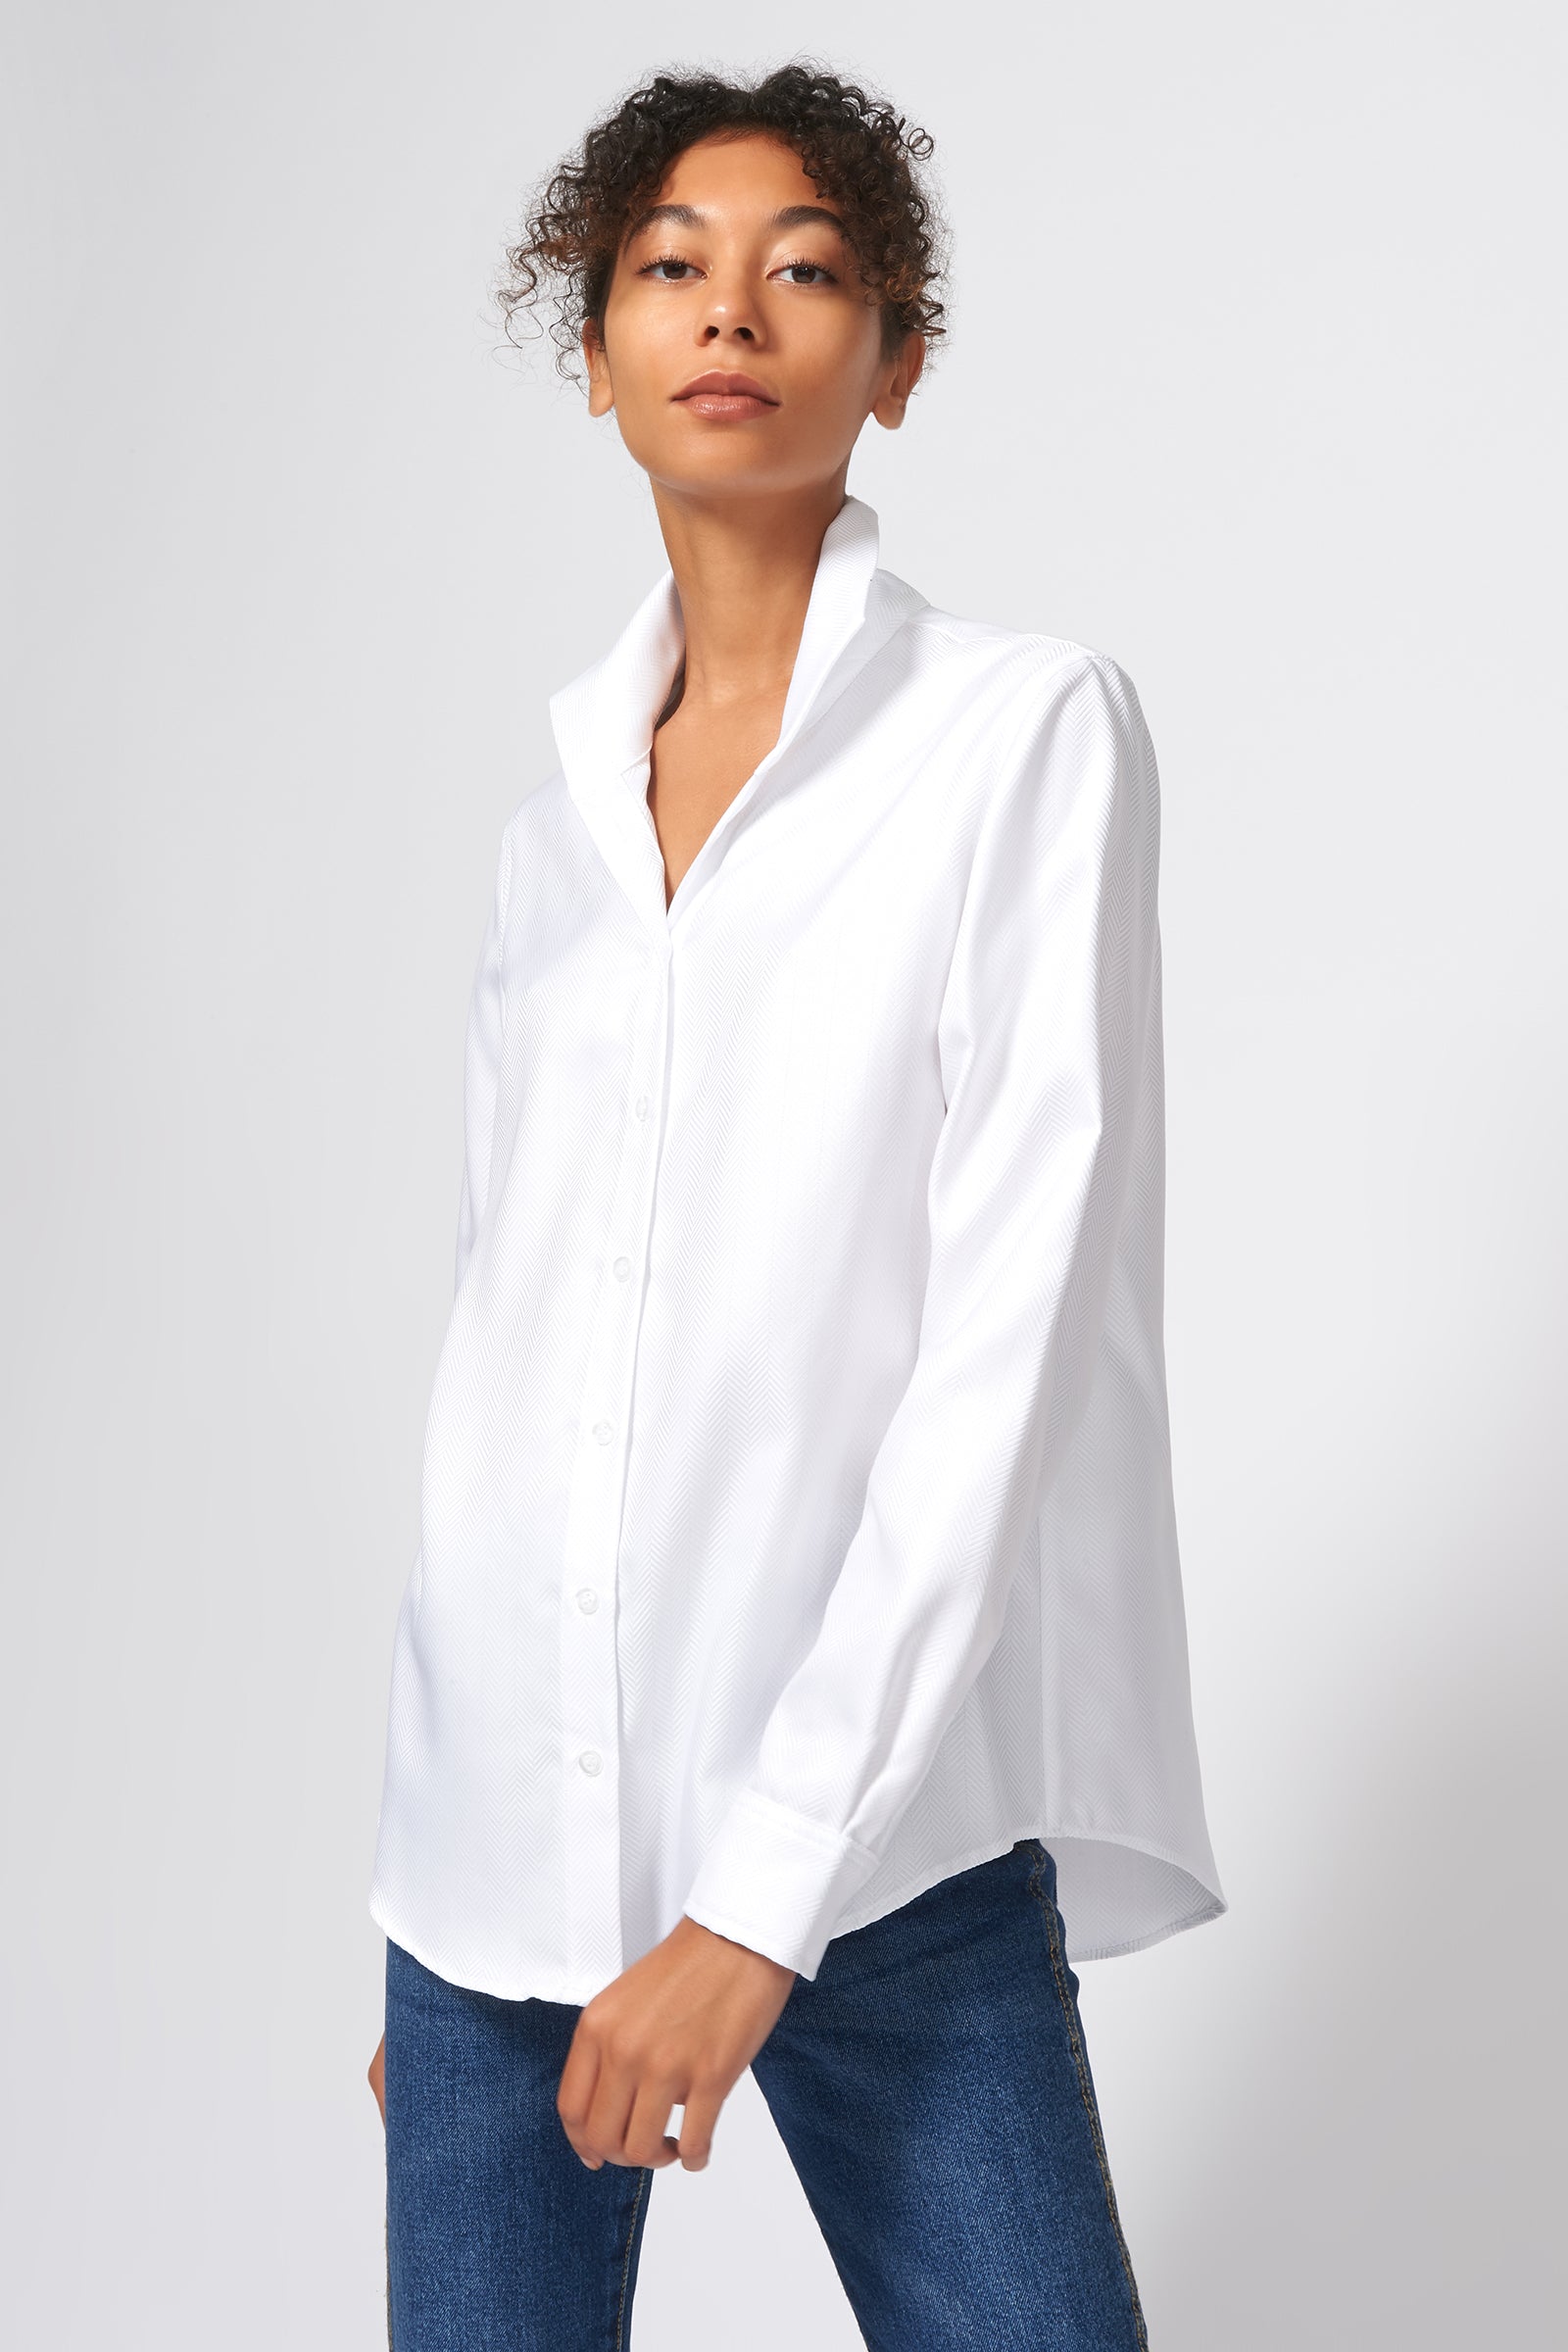 Kal Rieman Ginna Box Pleat Shirt in White Herringbone on Model Side View